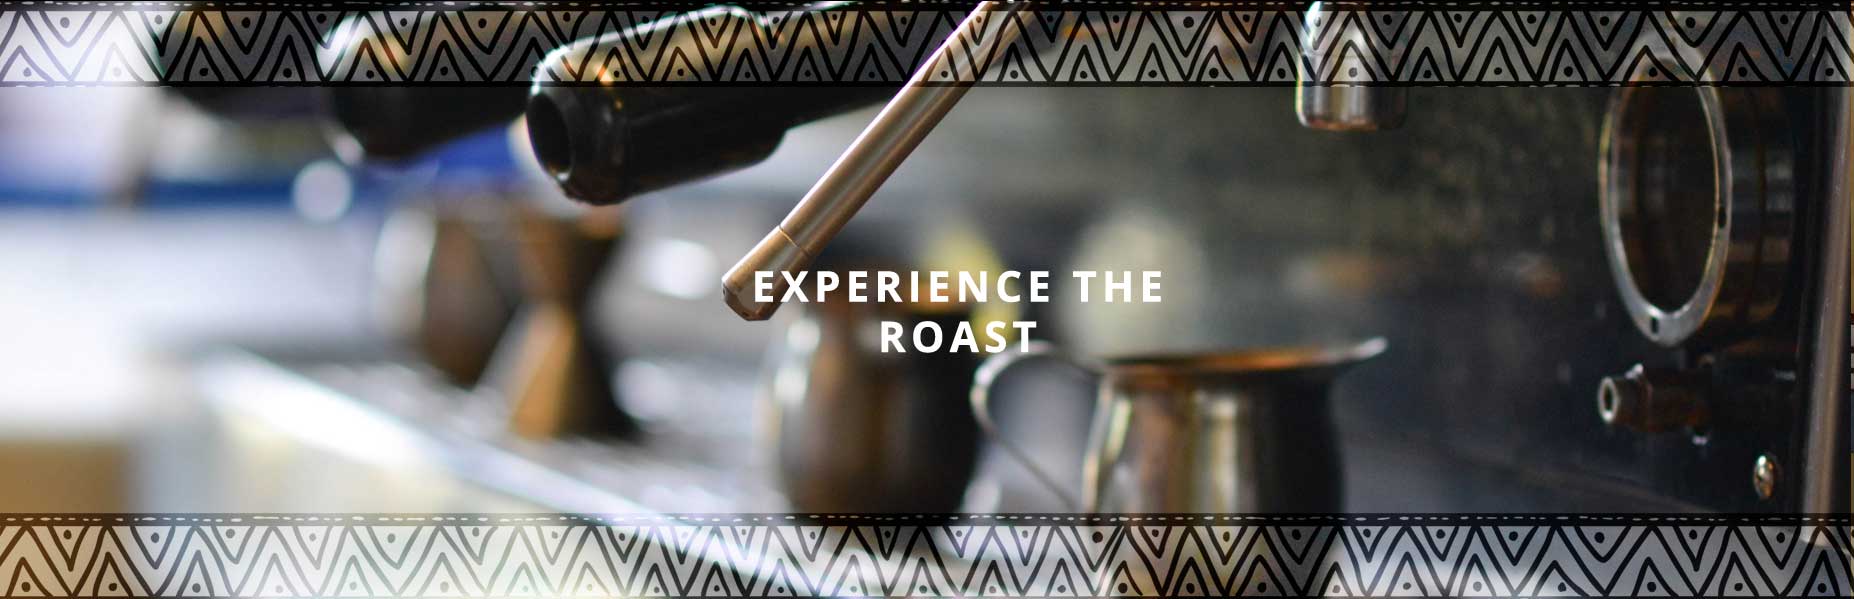 experience the roast